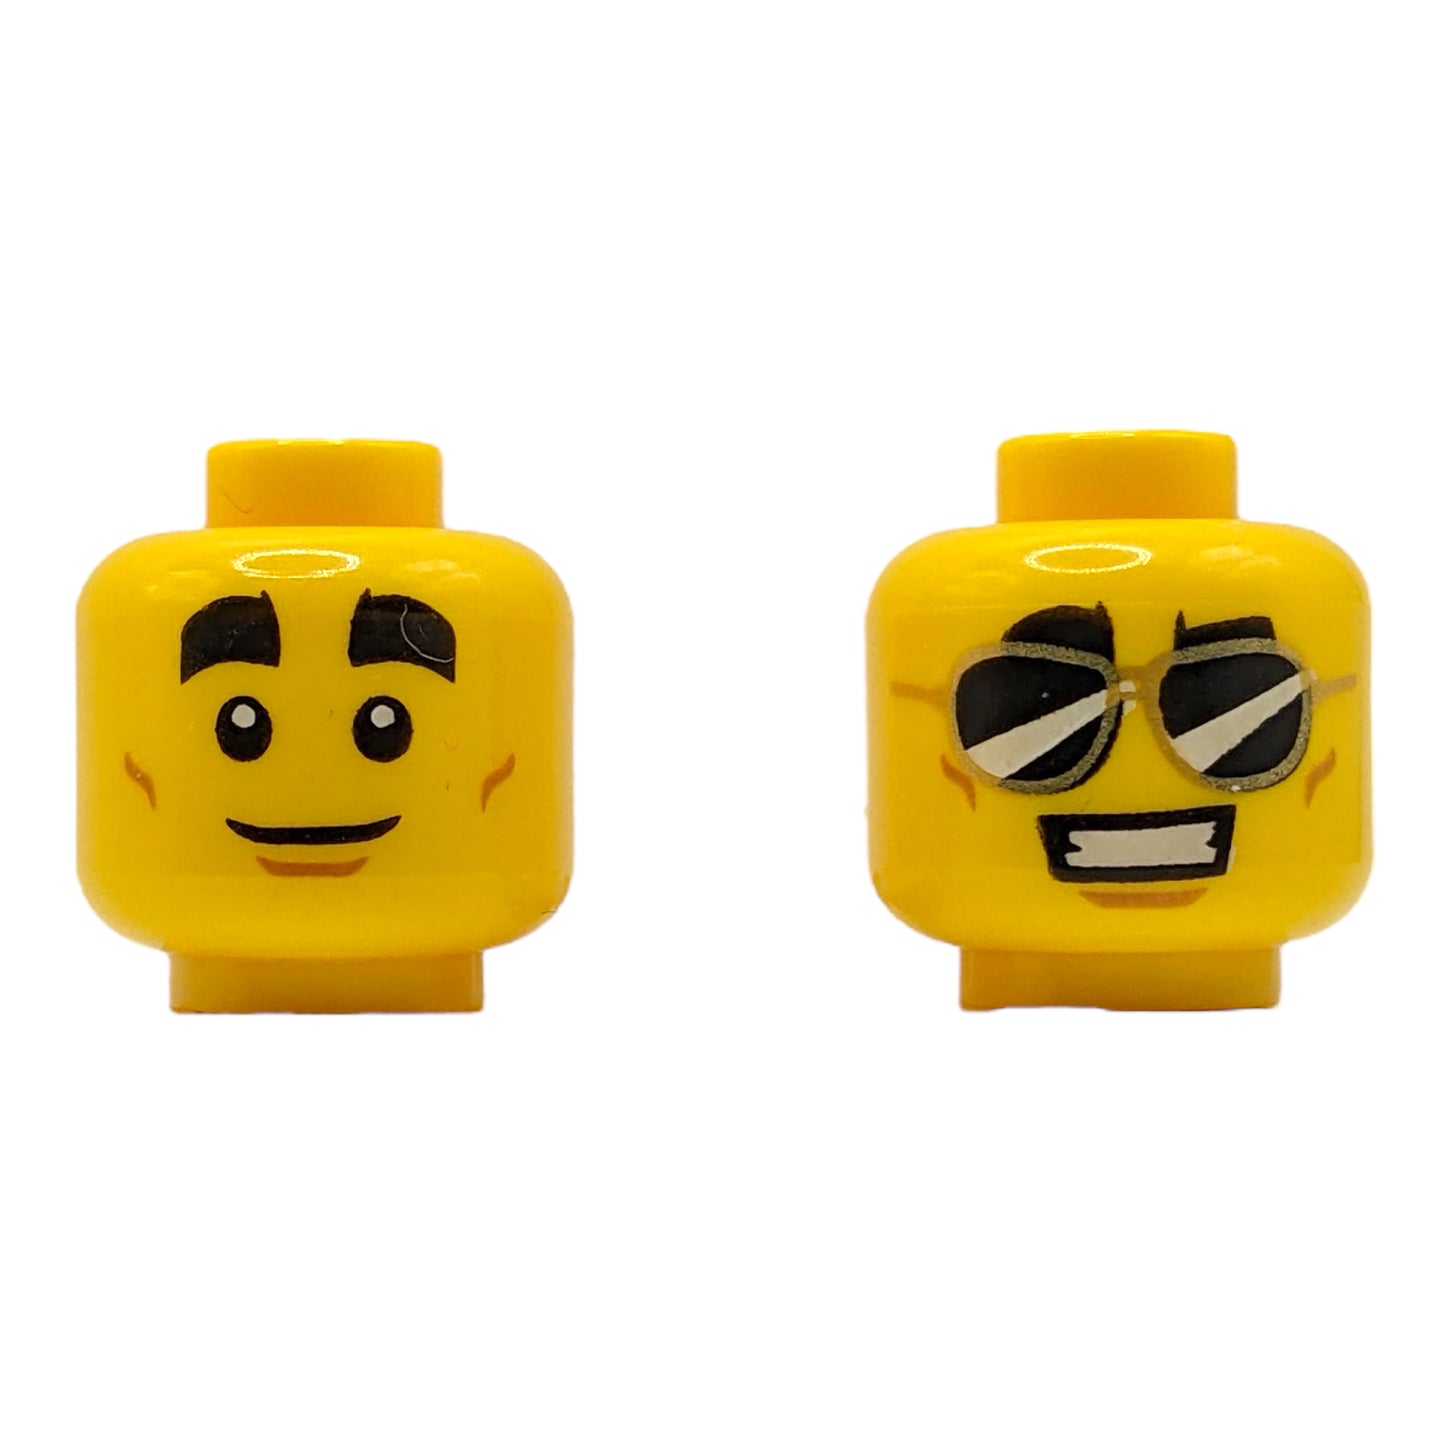 LEGO Head - 2970 Dual Sided Thick Black Eyebrows